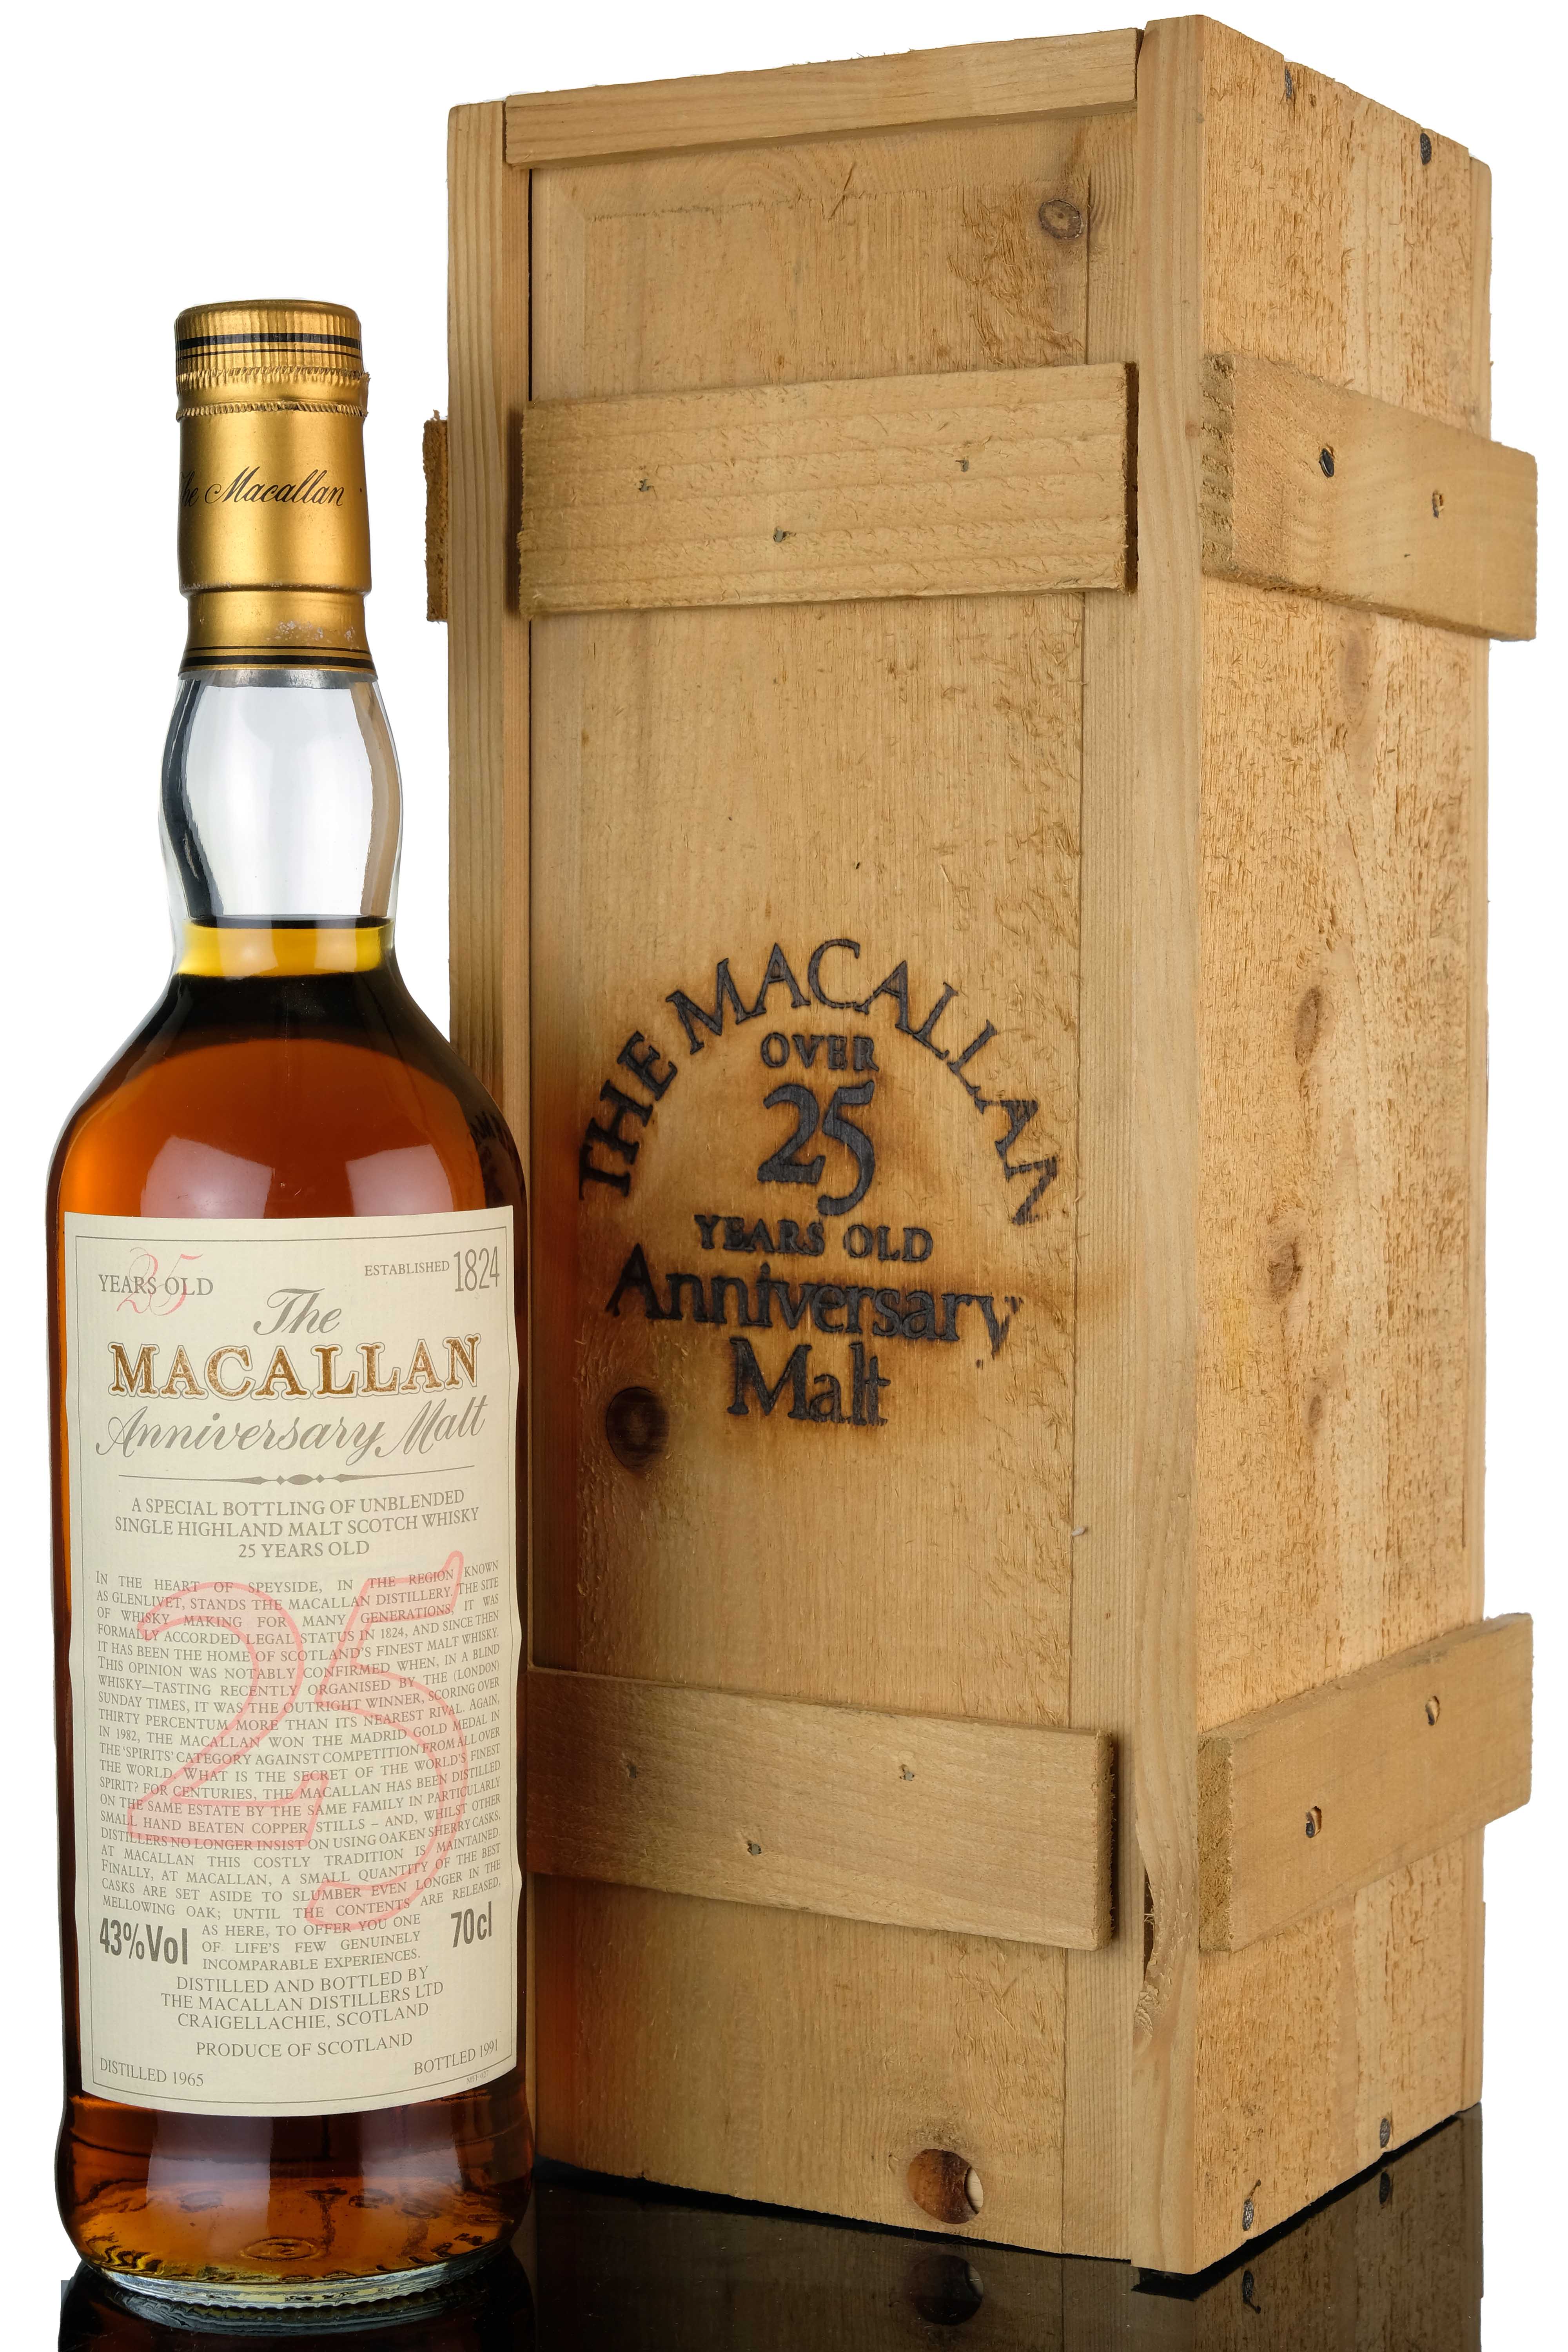 Macallan 1965-1991 - 25 Year Old - Anniversary Malt